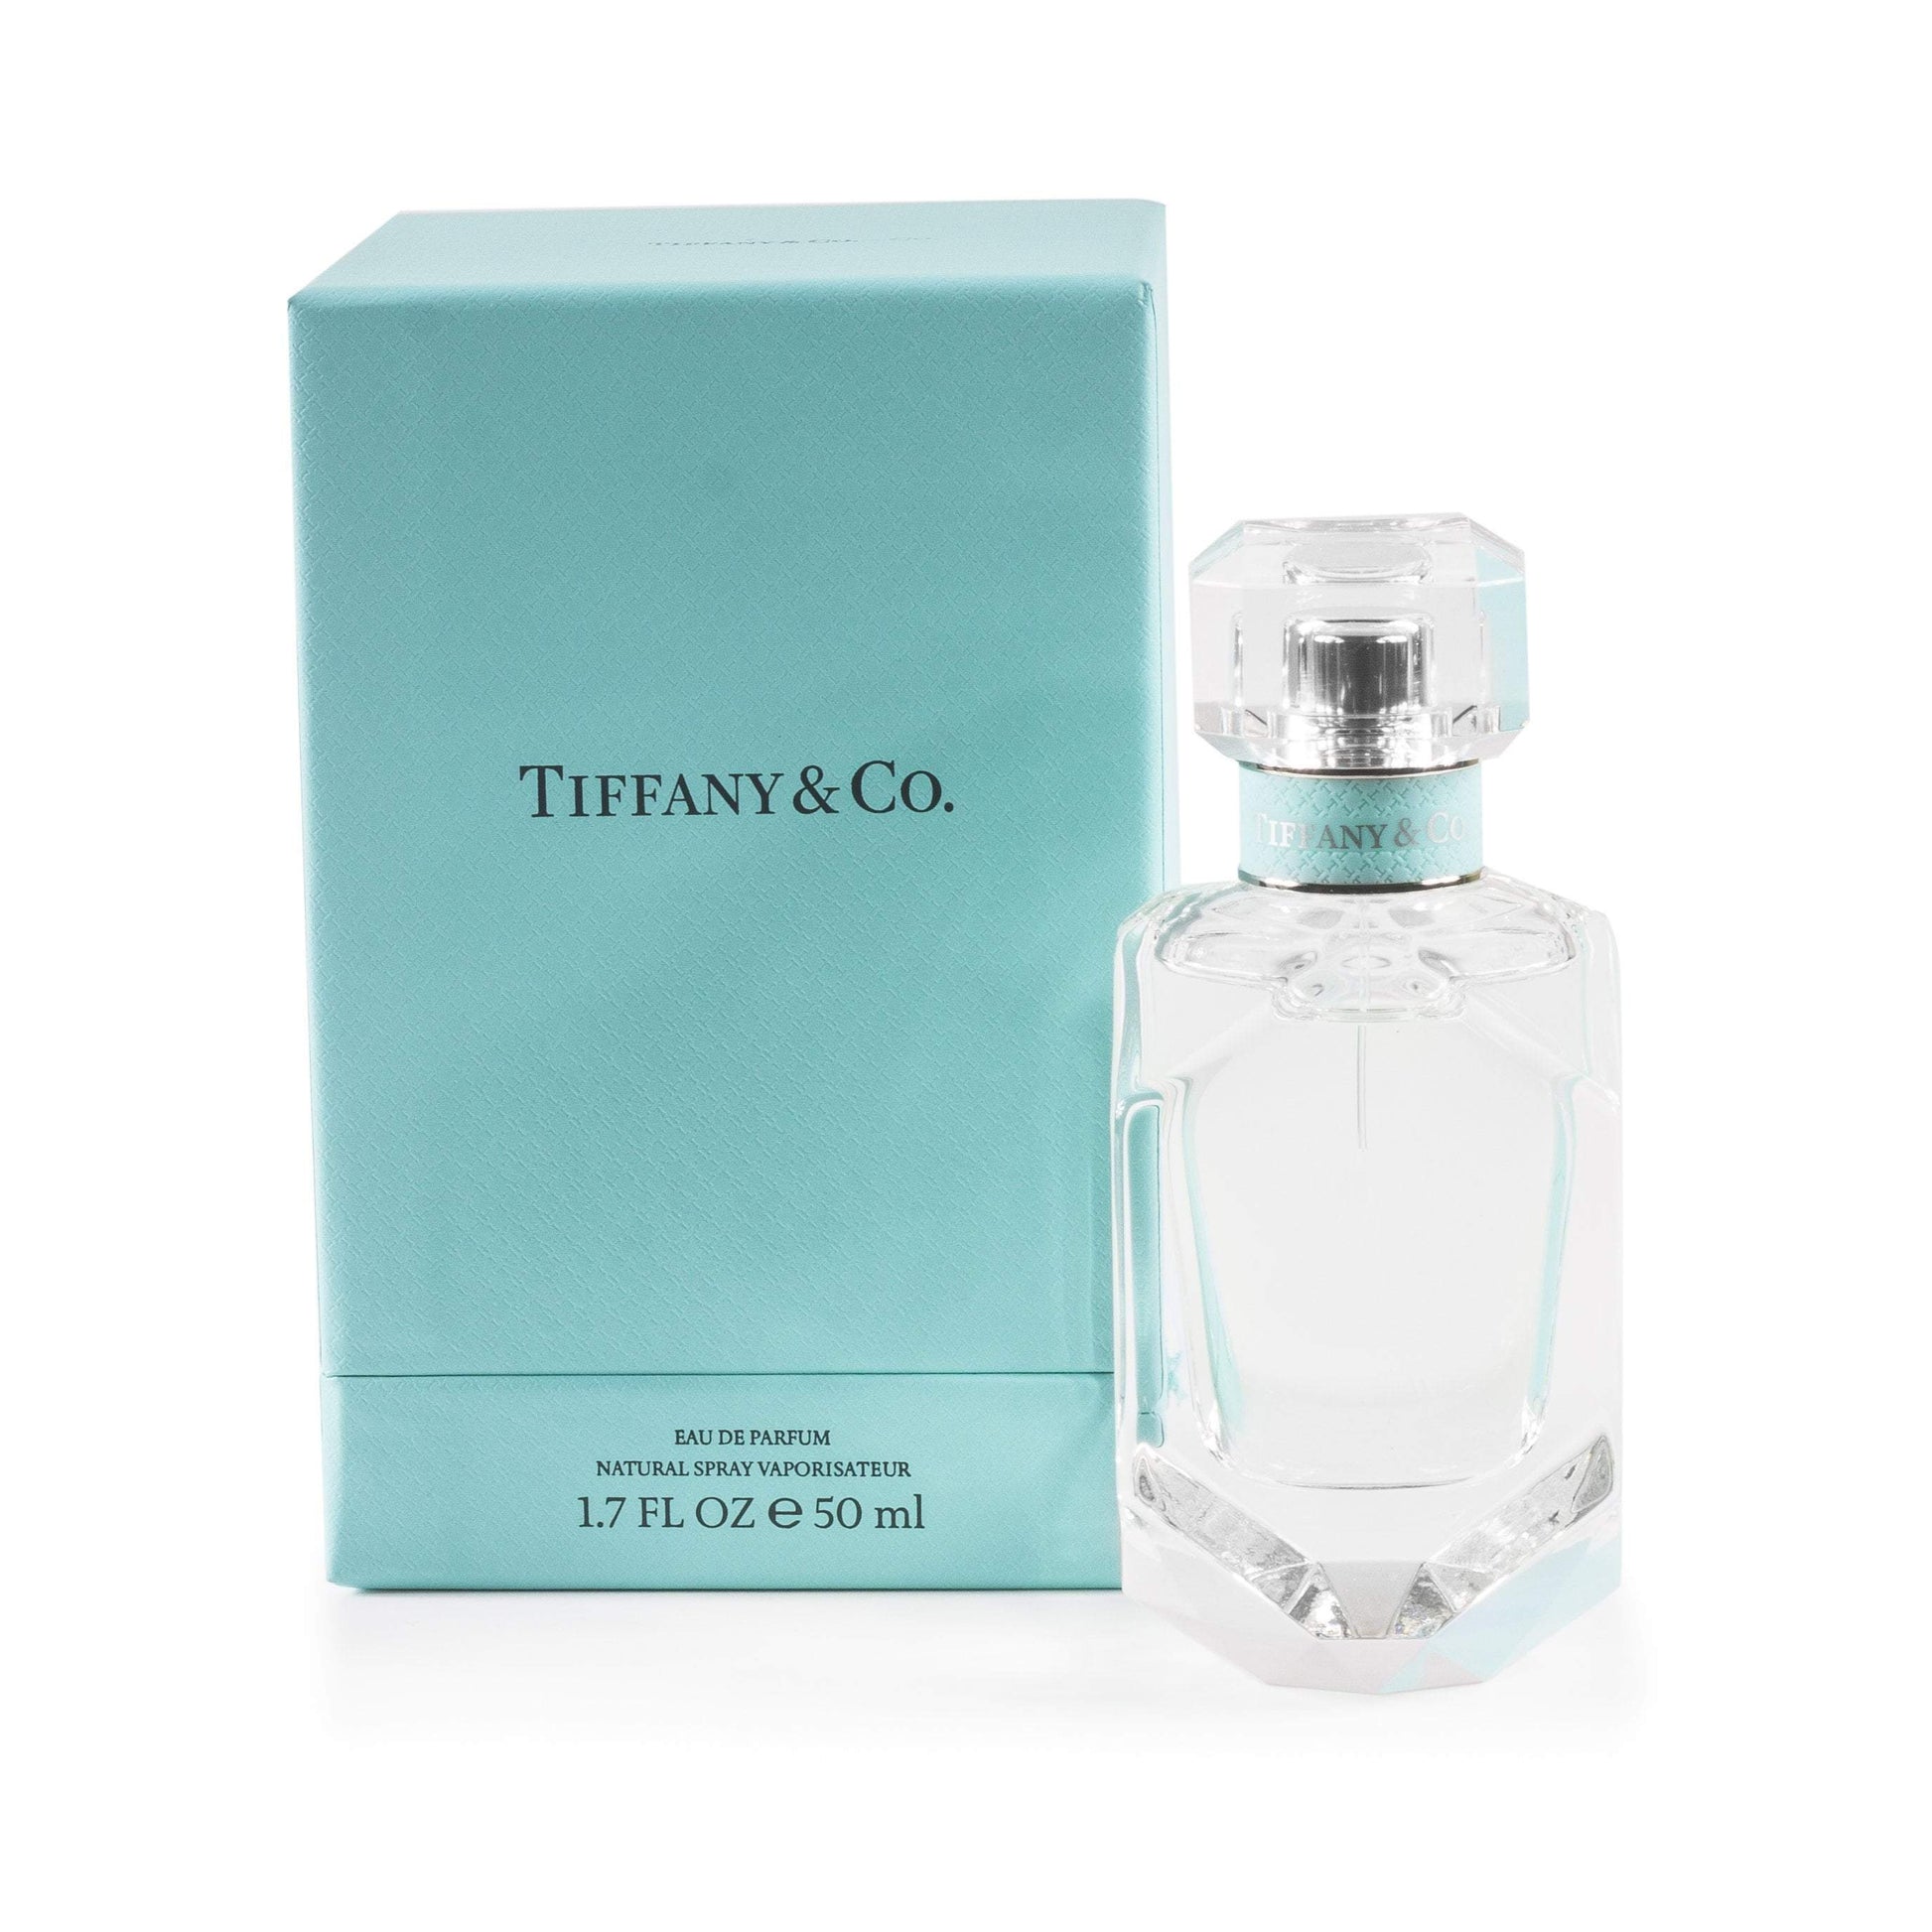 Tiffany & Co Eau de Parfum Spray for Women by Tiffany & Co, Product image 1